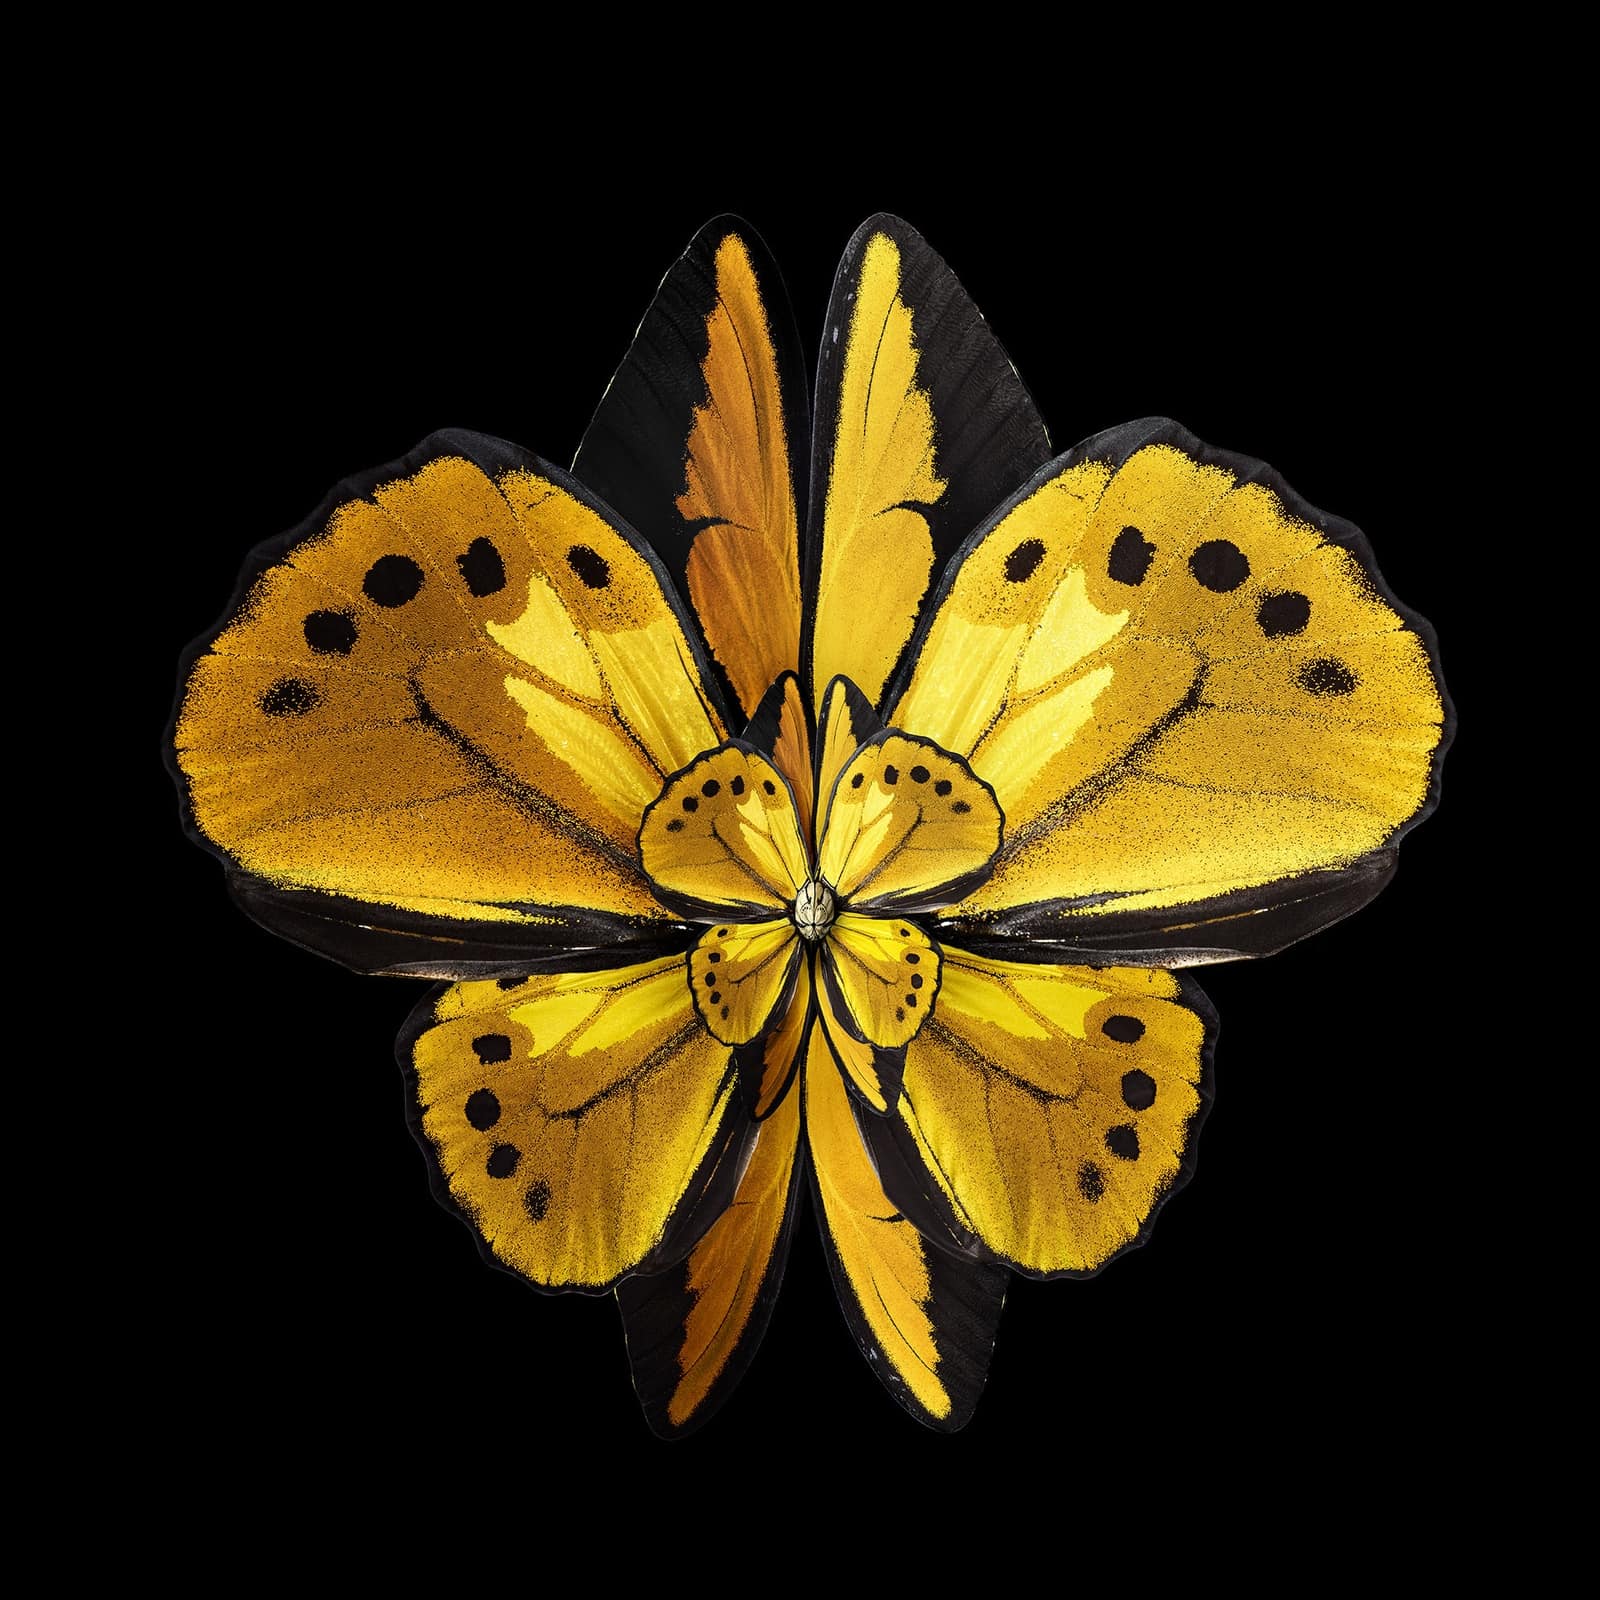 Лепесток крыло бабочки. Себ Жаньяк. Цветы из крыльев бабочек от Seb Janiak. Бабочка с крыльями из цветов. Мимесис цветок.